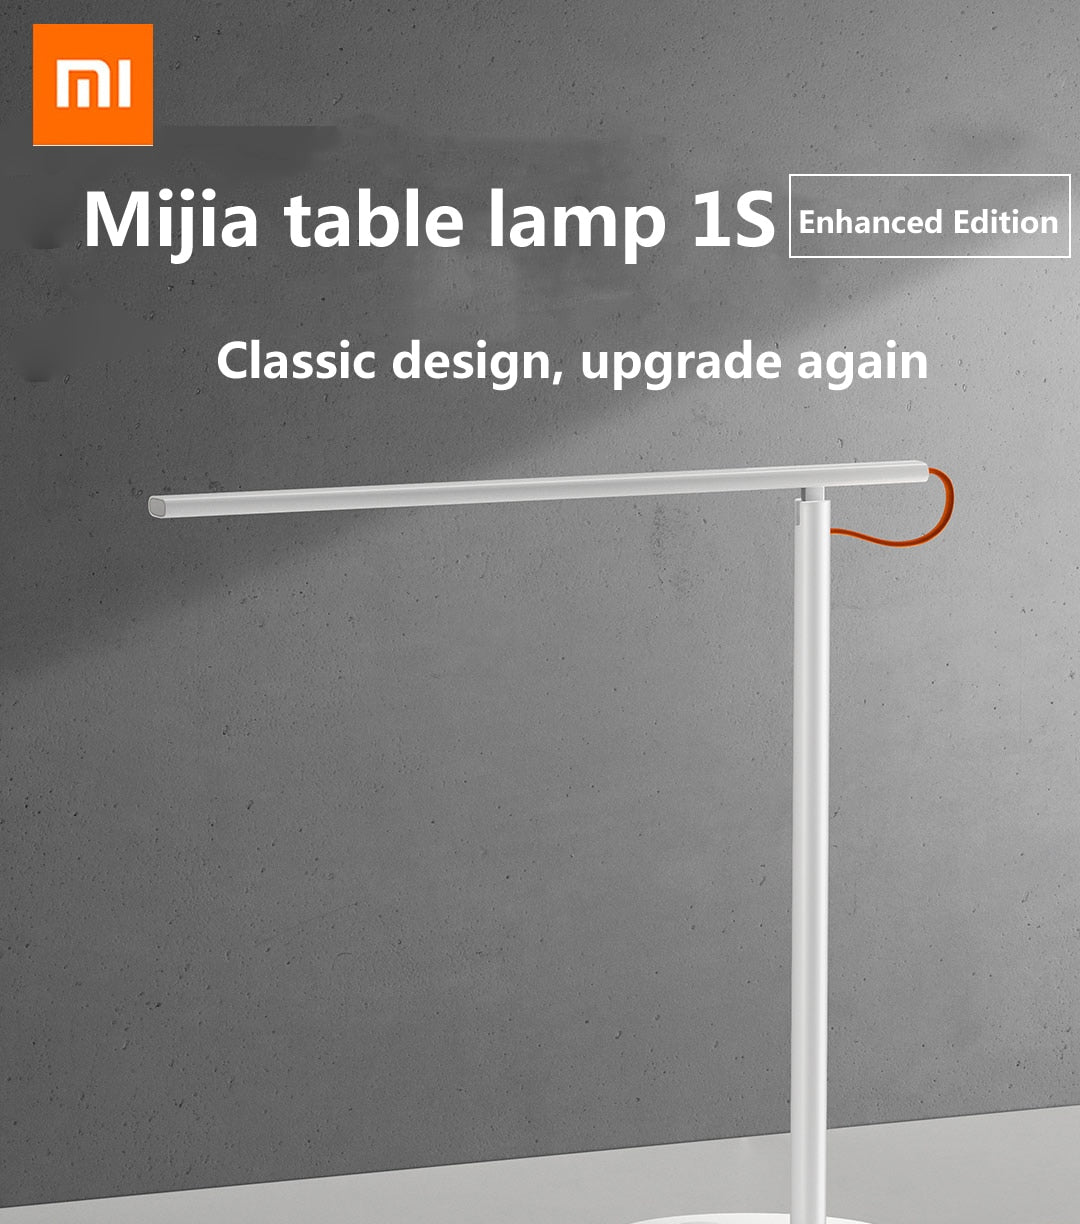 Original Xiaomi Mijia Smart LED Desk Lamp 1S 9W Table Lamp 4 Light Mode Dimmable Apple HomeKit Mi Home APP Siri Voice Control